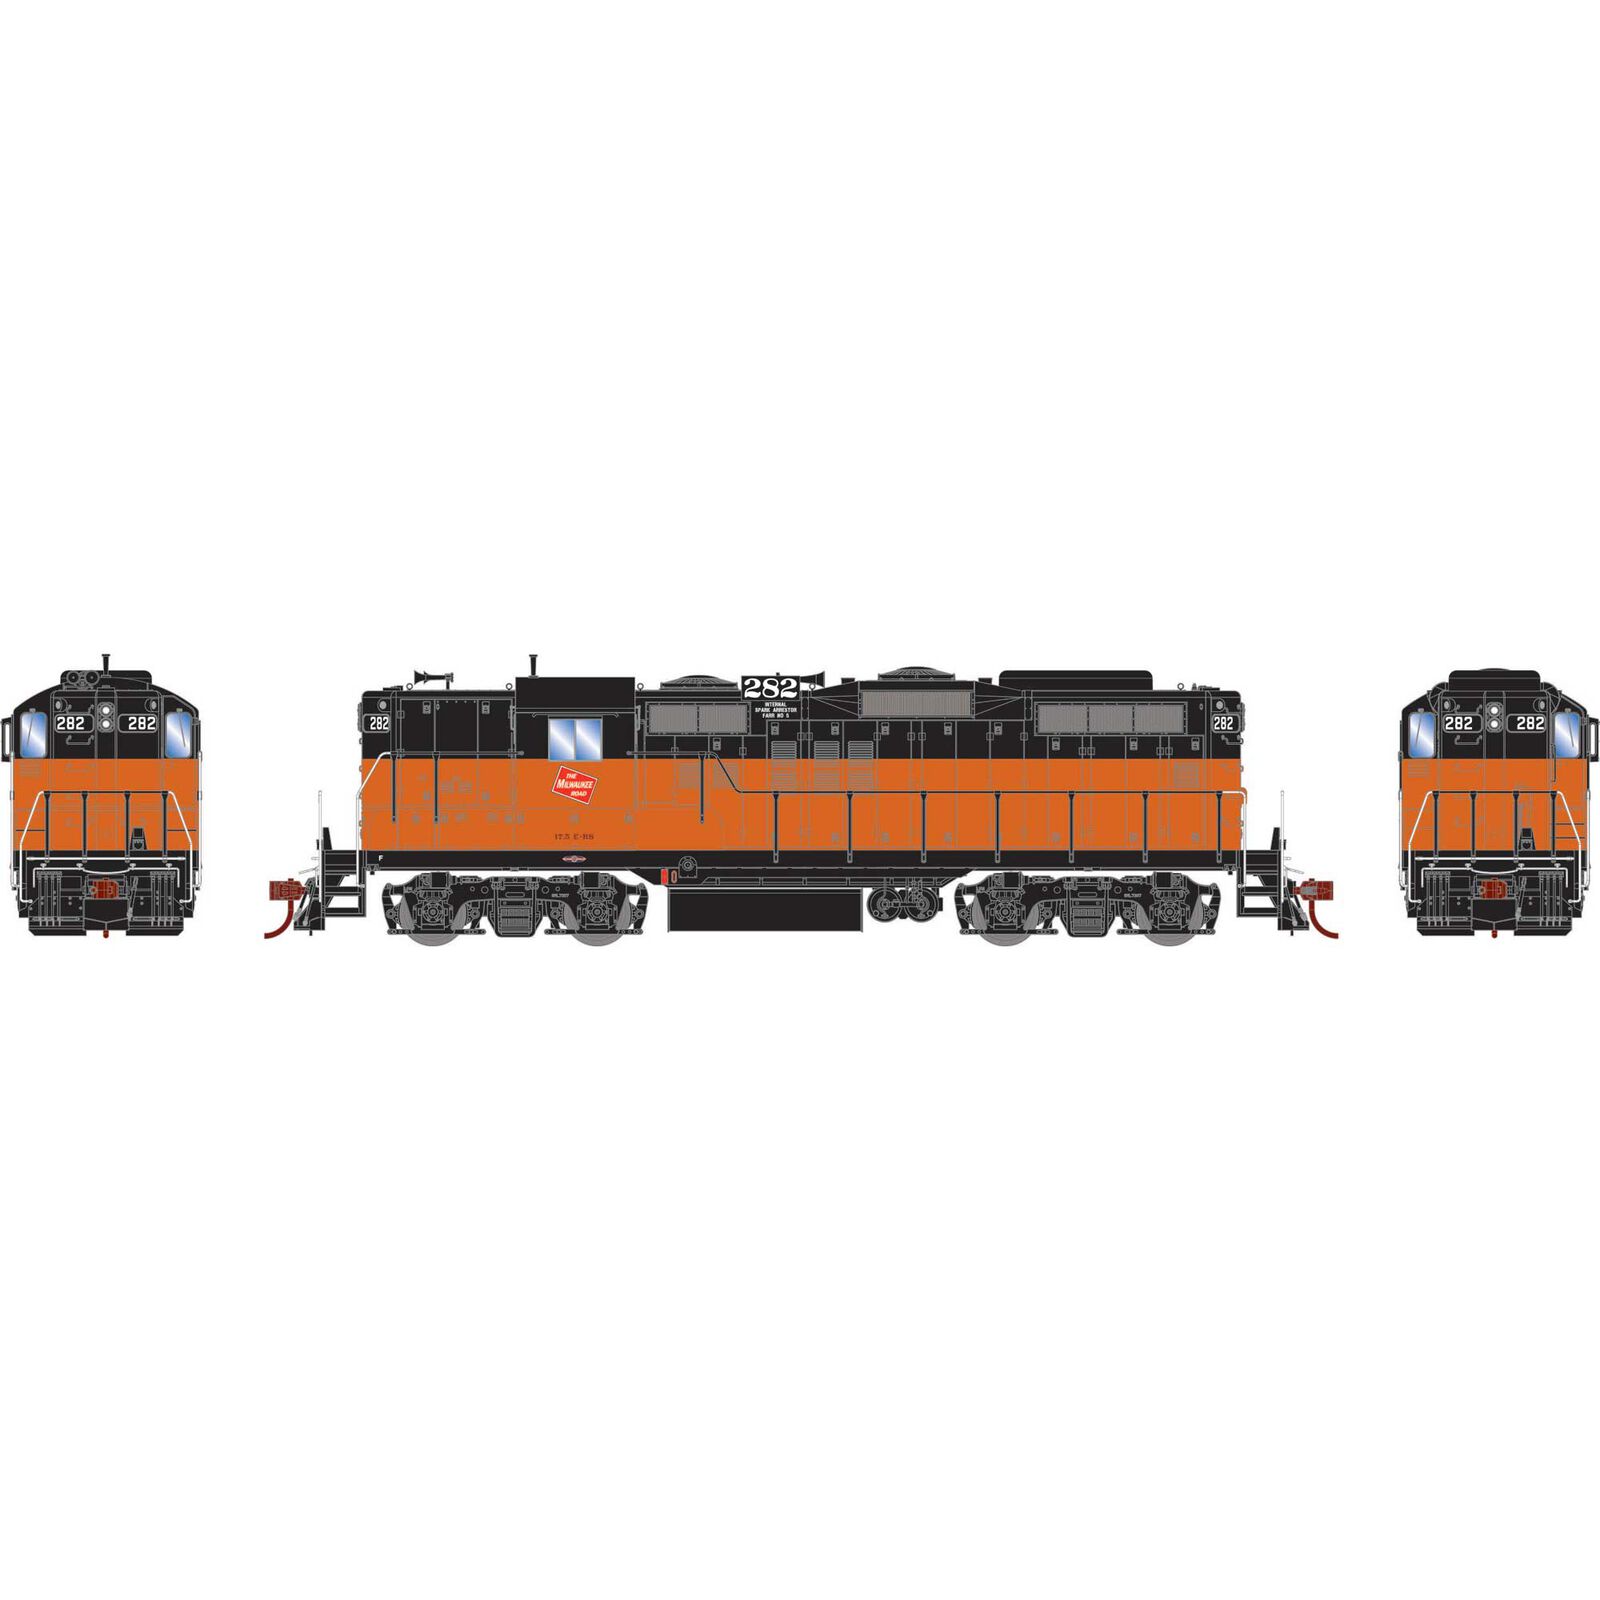 HO GP9 Locomotive with DCC & Sound, MILW #282